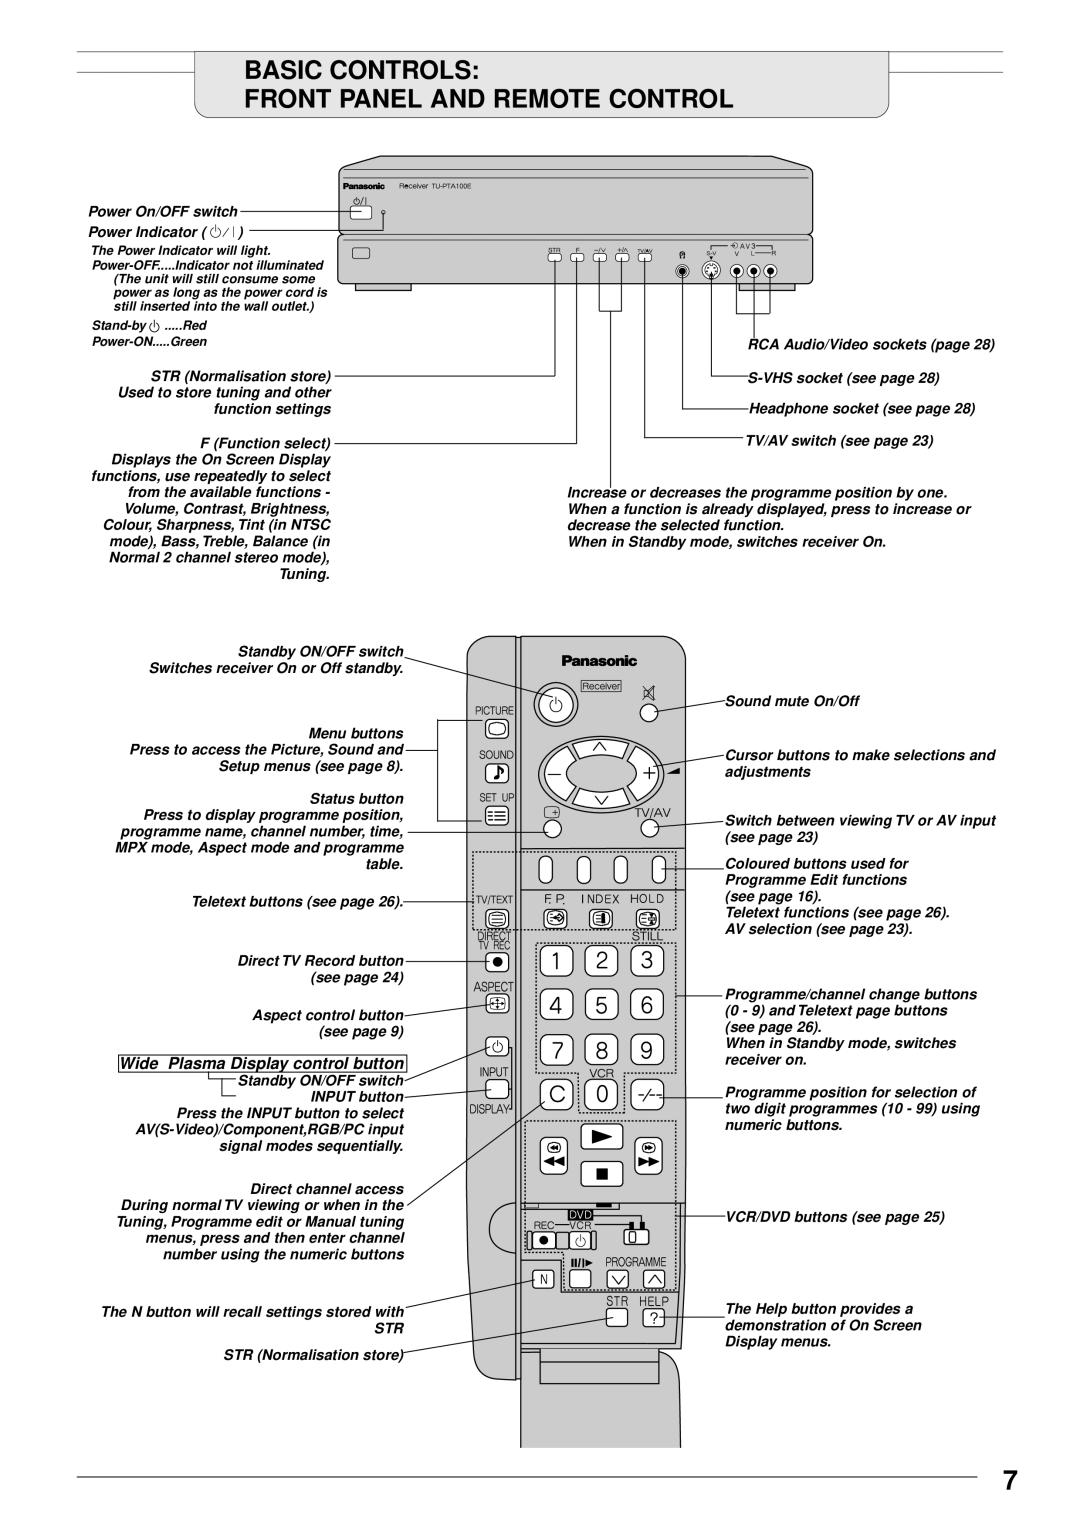 Panasonic TU-PTA100E manual Basic Controls Front Panel And Remote Control, Wide Plasma Display control button 